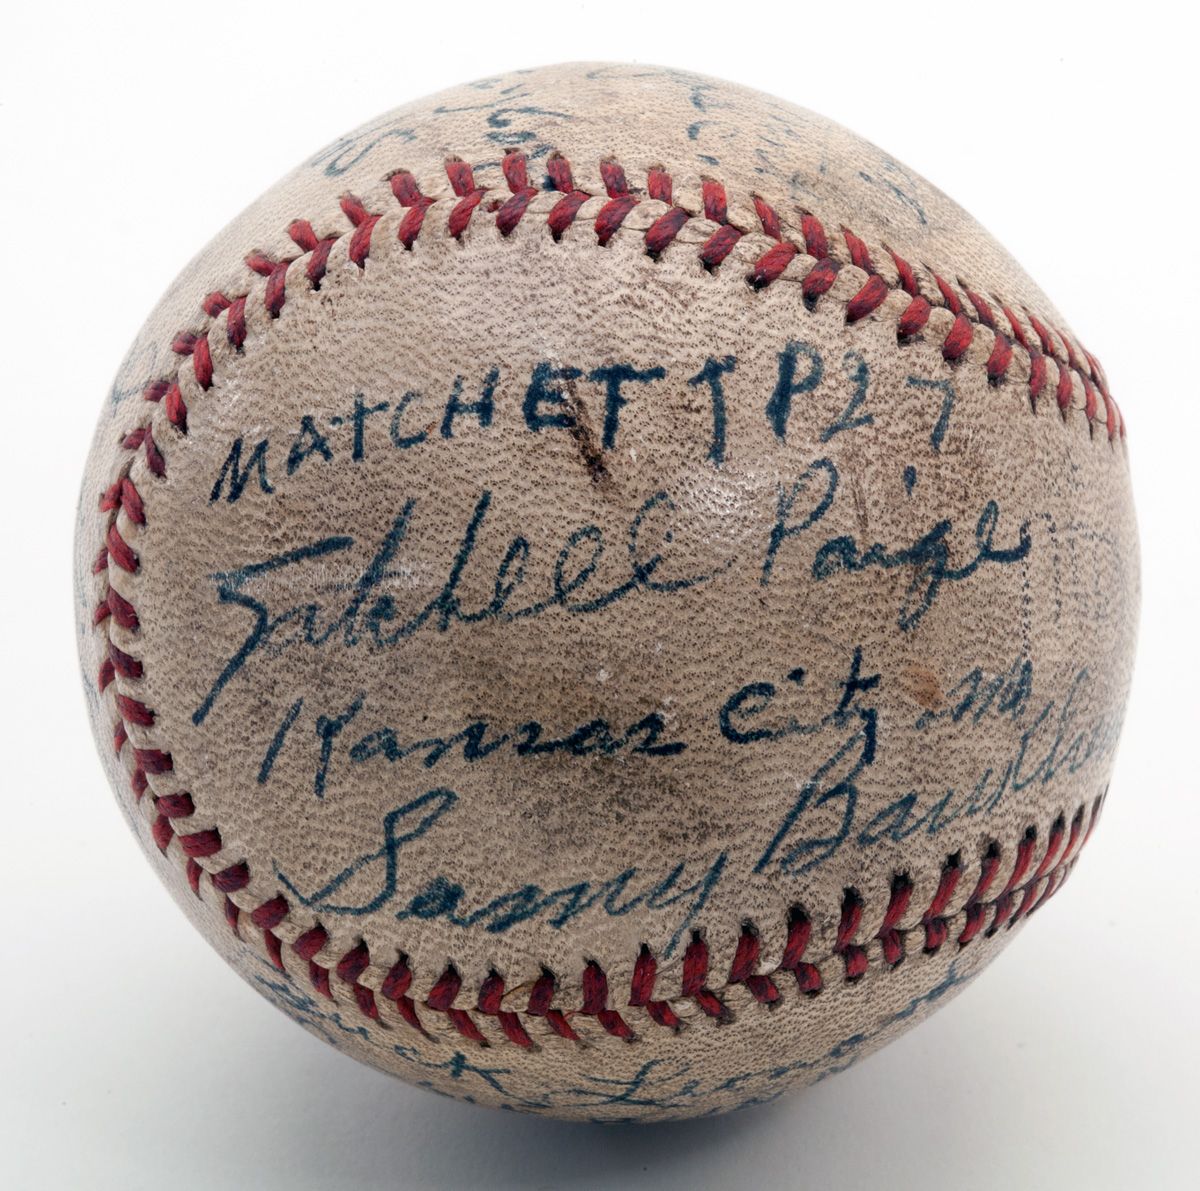 Satchel Paige baseball card drawing big-money bids 